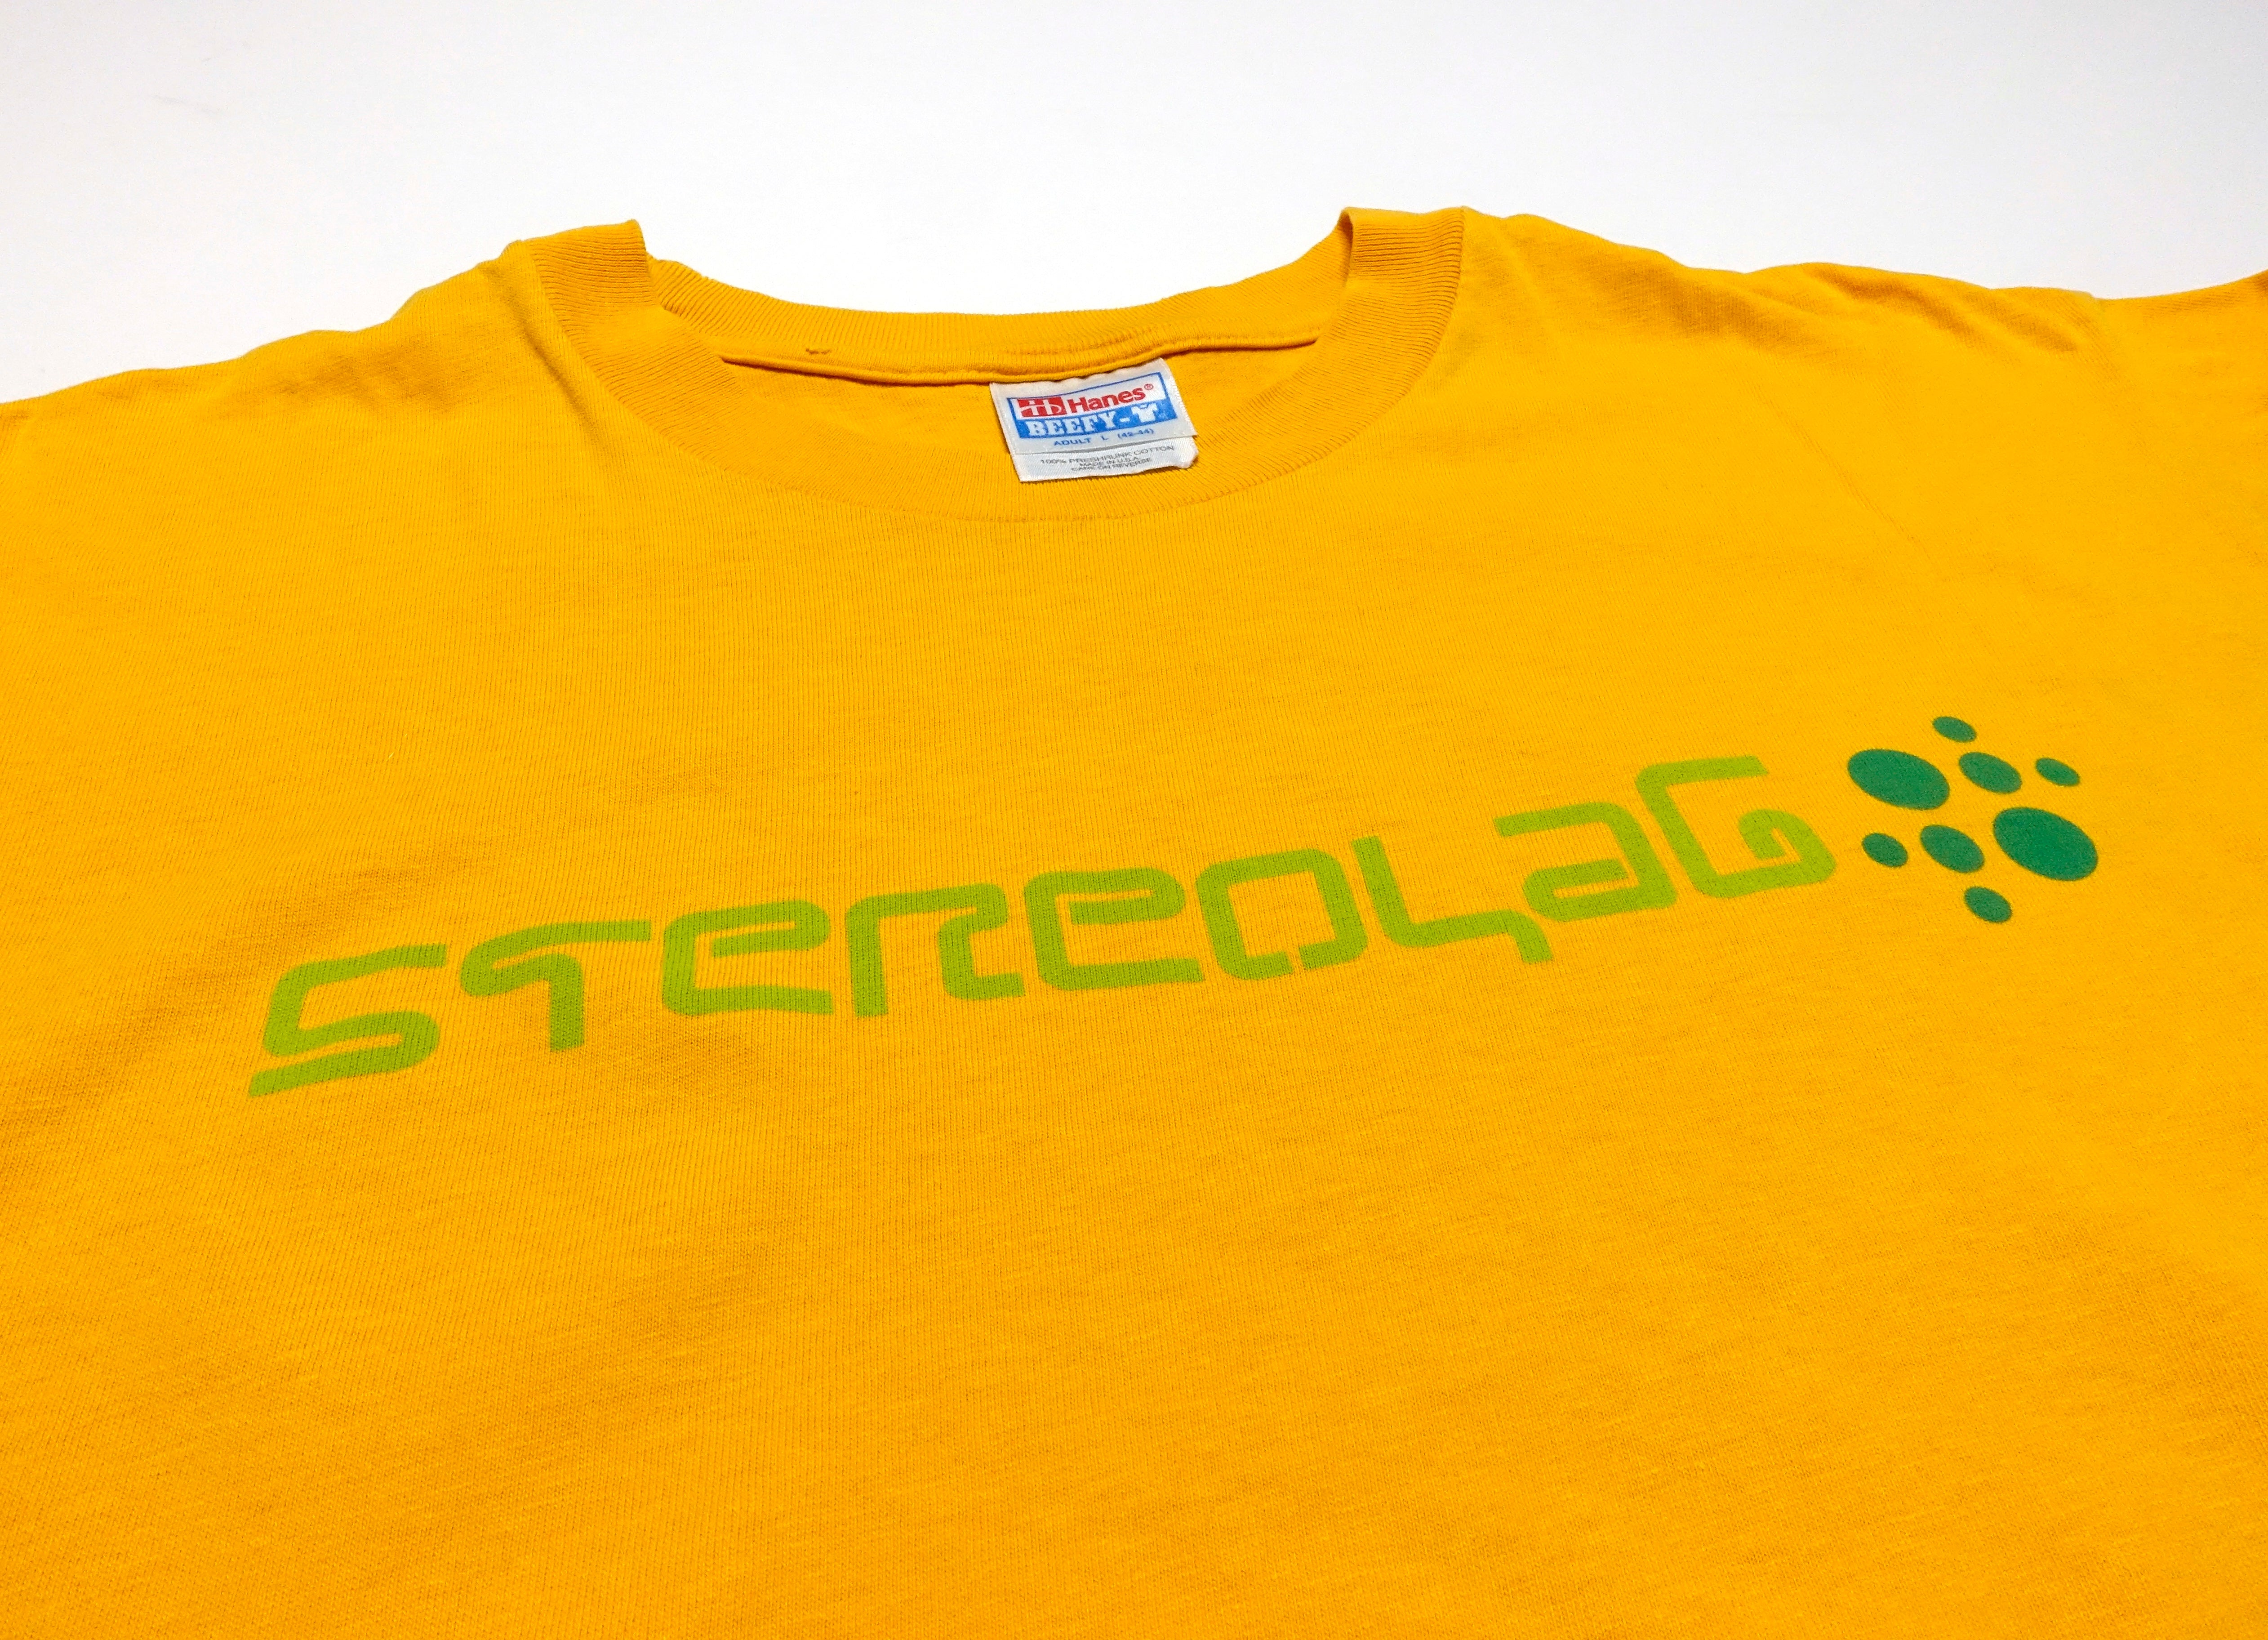 Stereolab – Iron Man 90's Tour Shirt Size Large